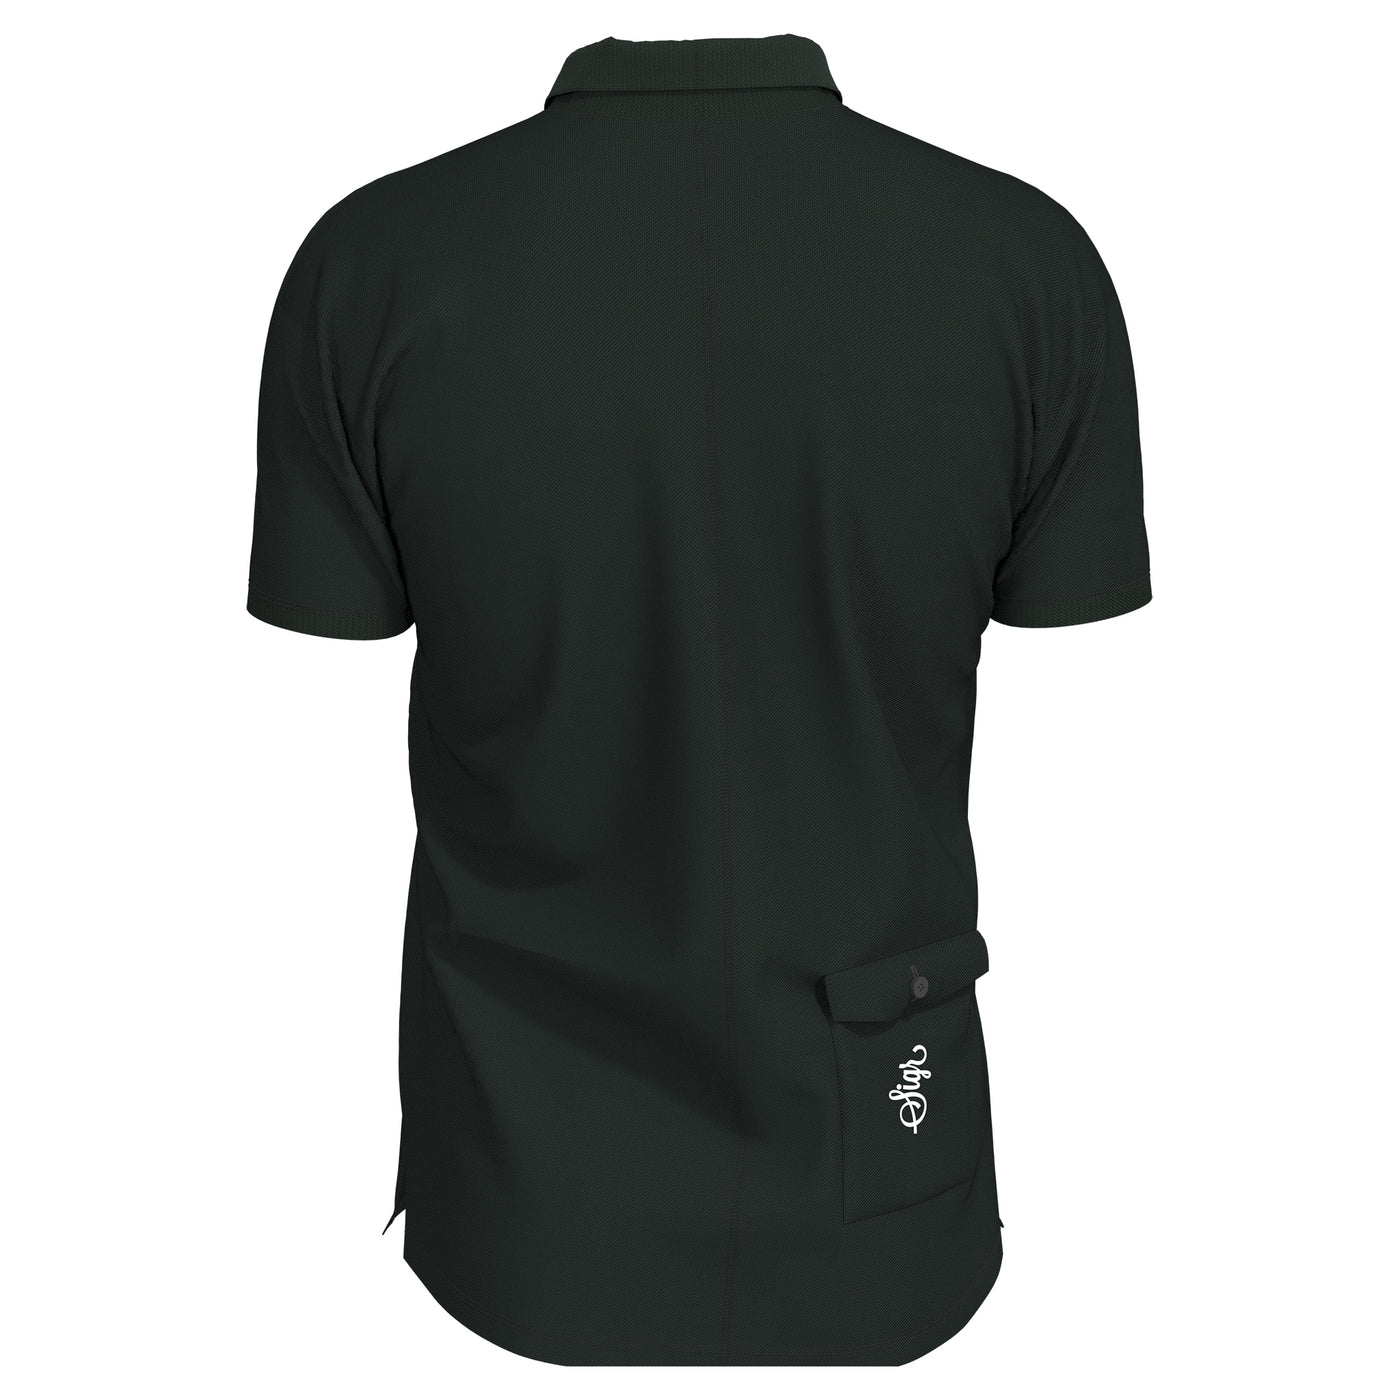 Sigr Pike - Dark Green Polo Shirt with Sigr Logo for Men